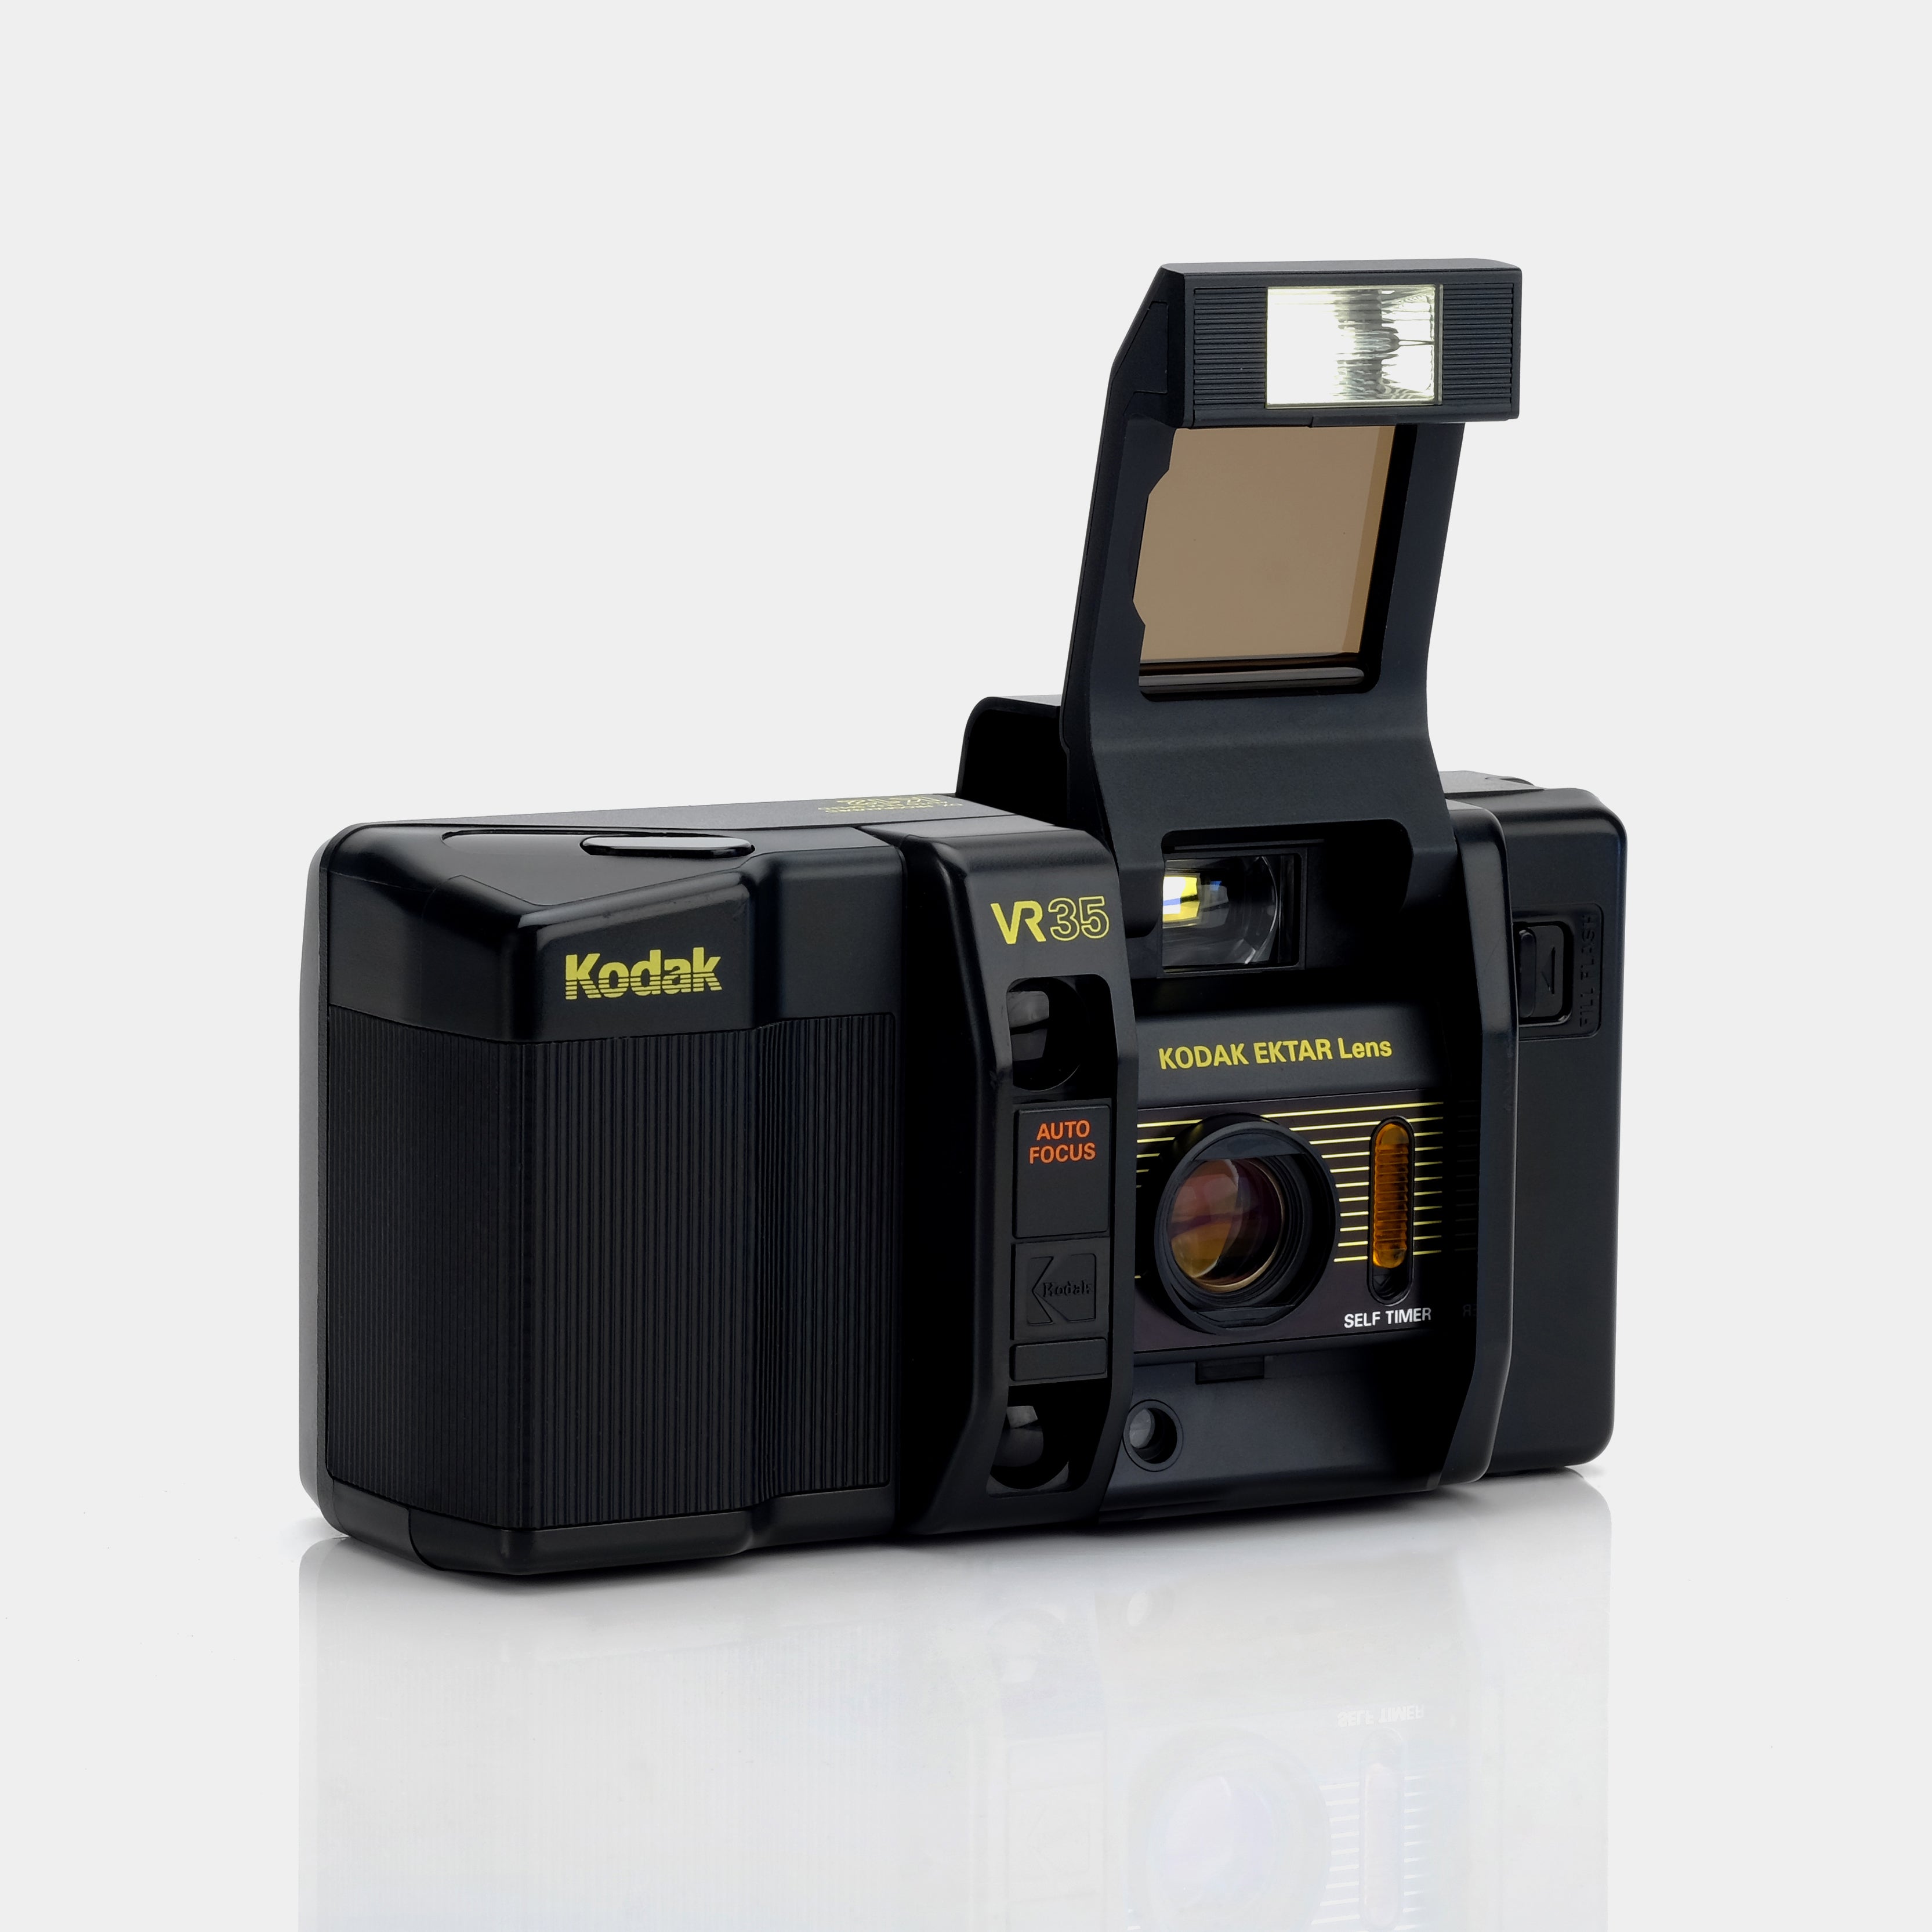 Kodak VR-35 K12 Ektar 35mm Point and Shoot Film Camera